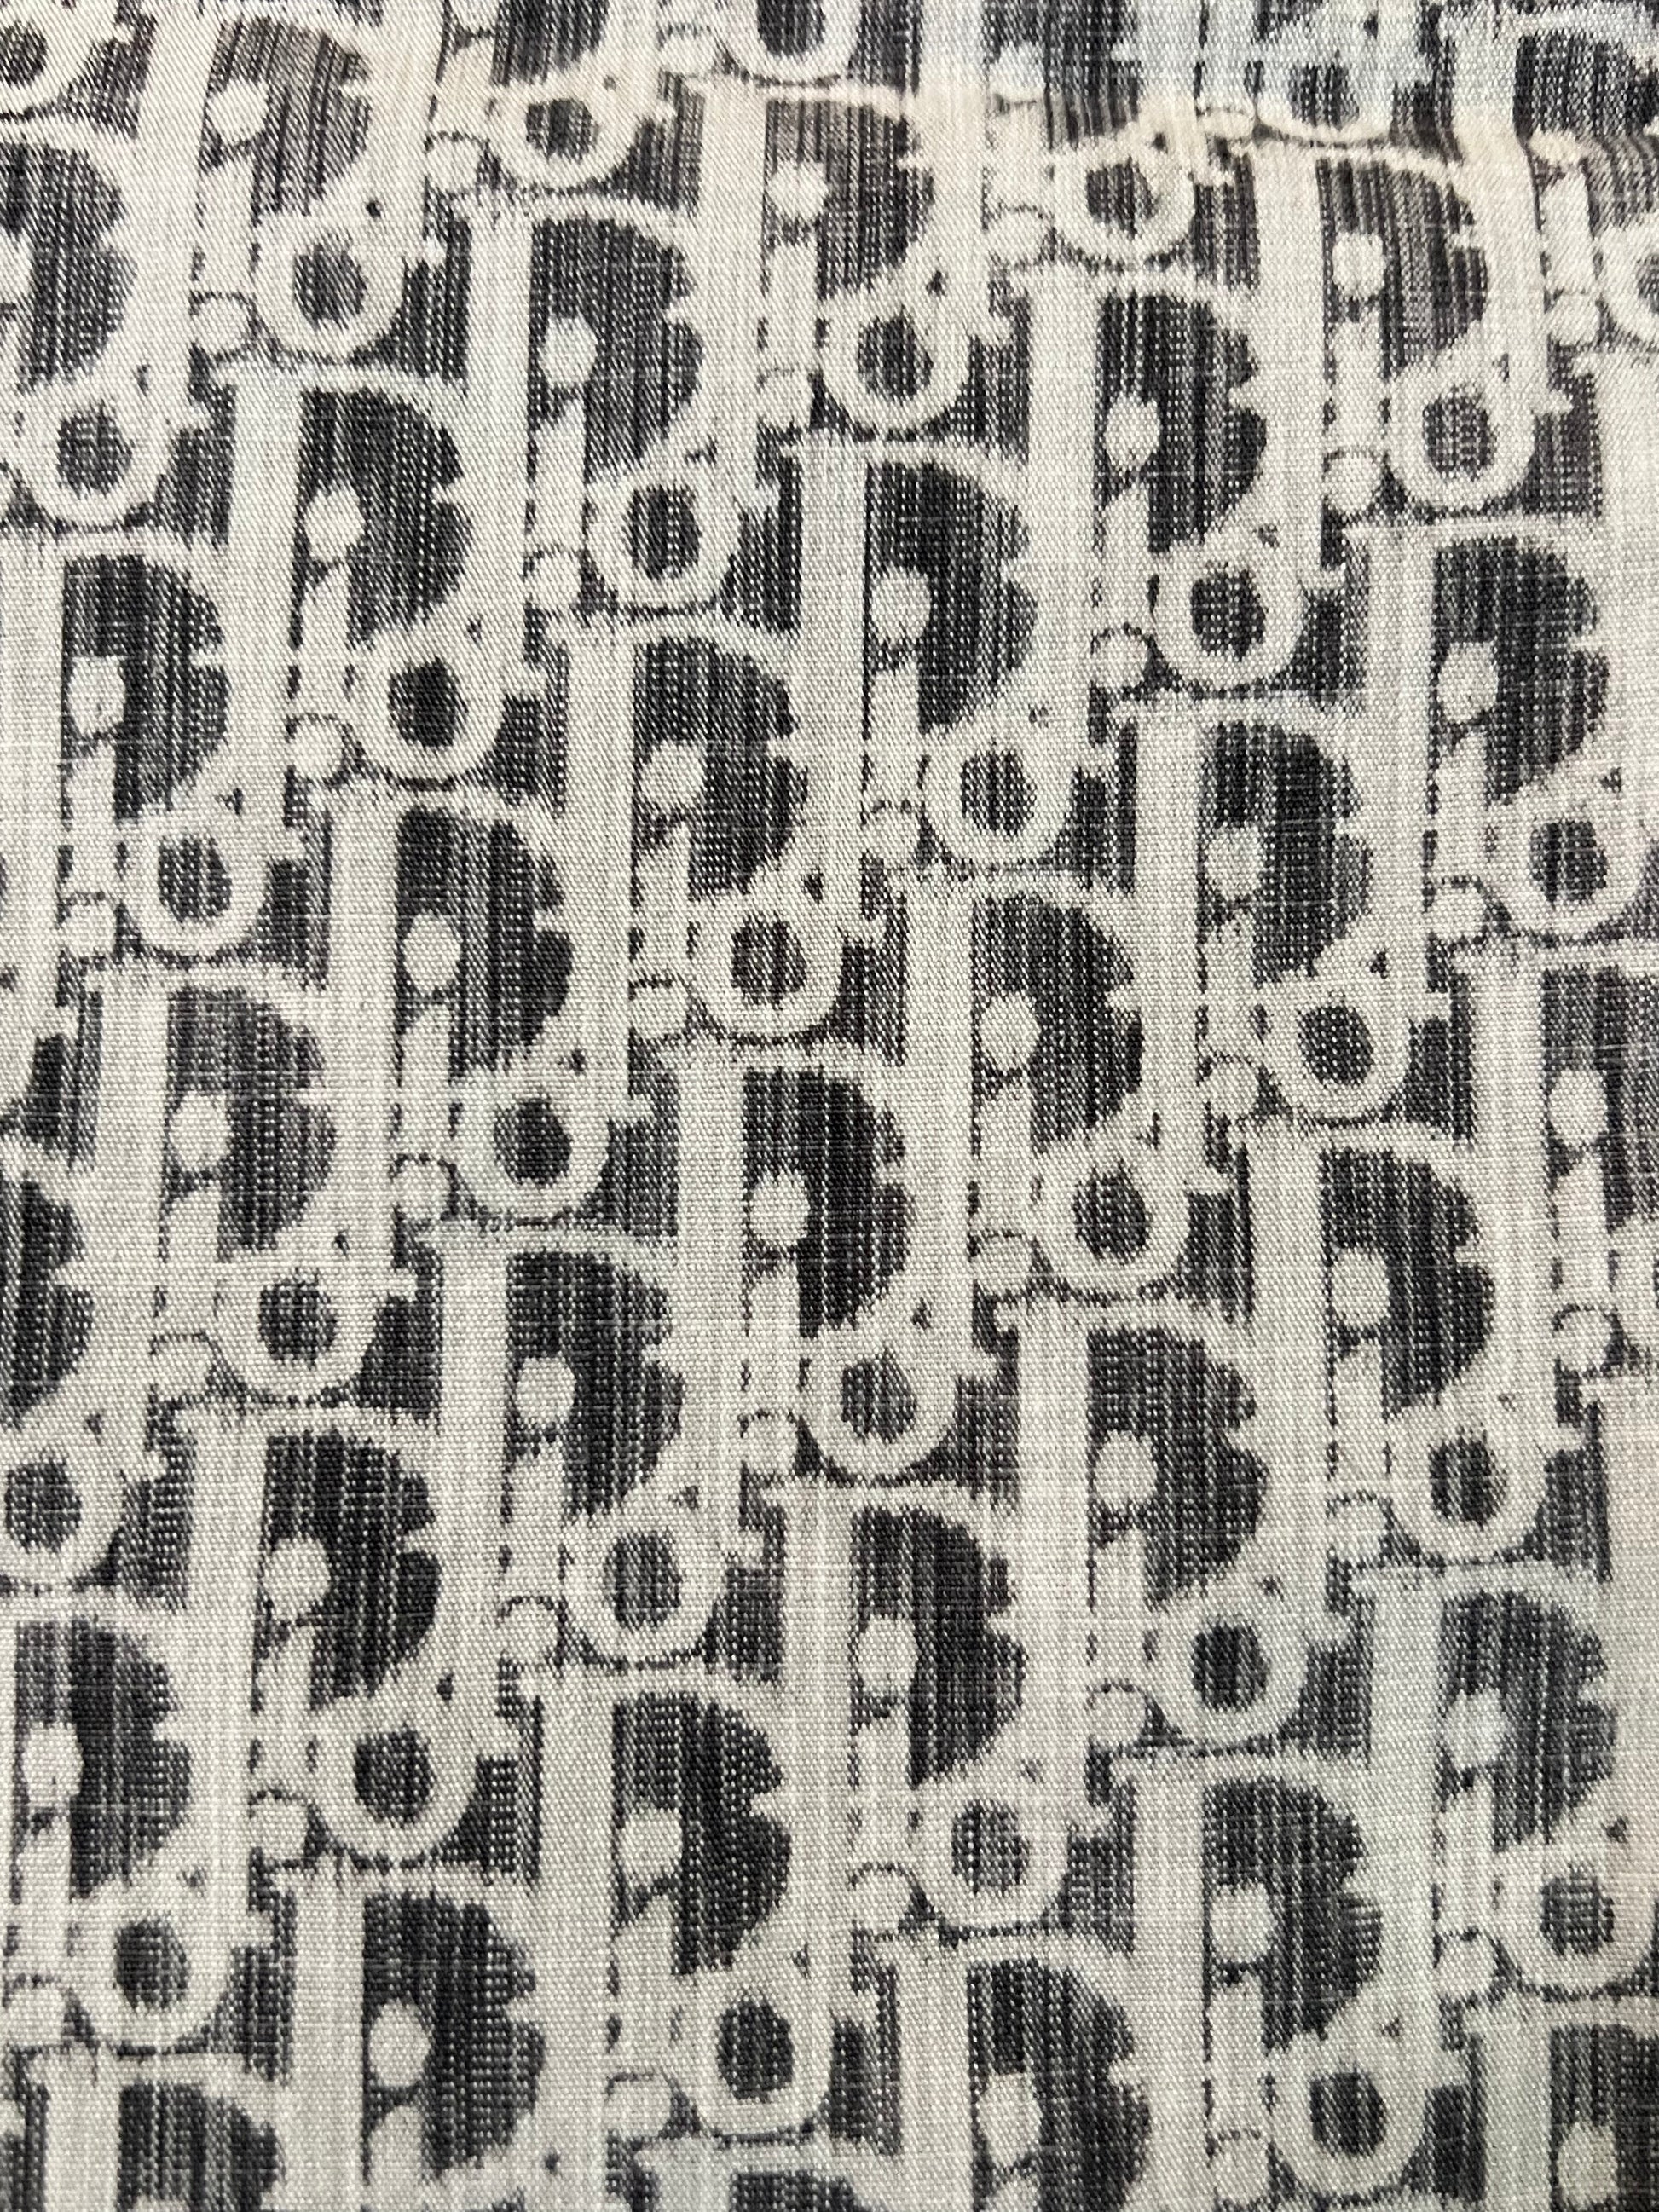 Dior Monogram Mesh Lace Fabric WDWB916 White Black for Undershirts